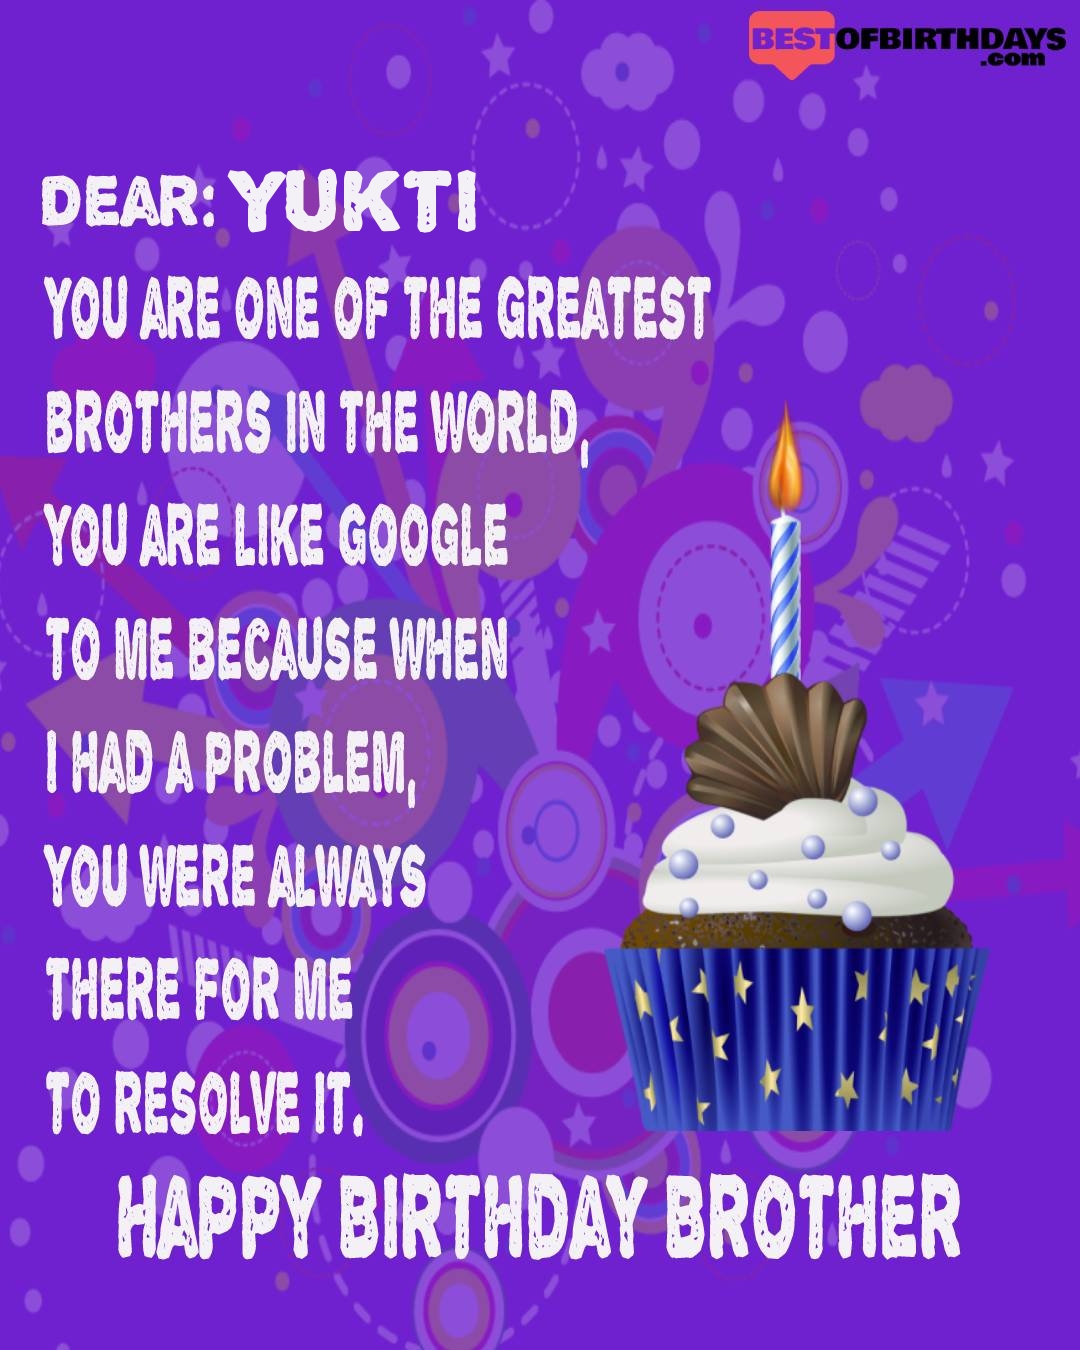 Happy birthday yukti bhai brother bro